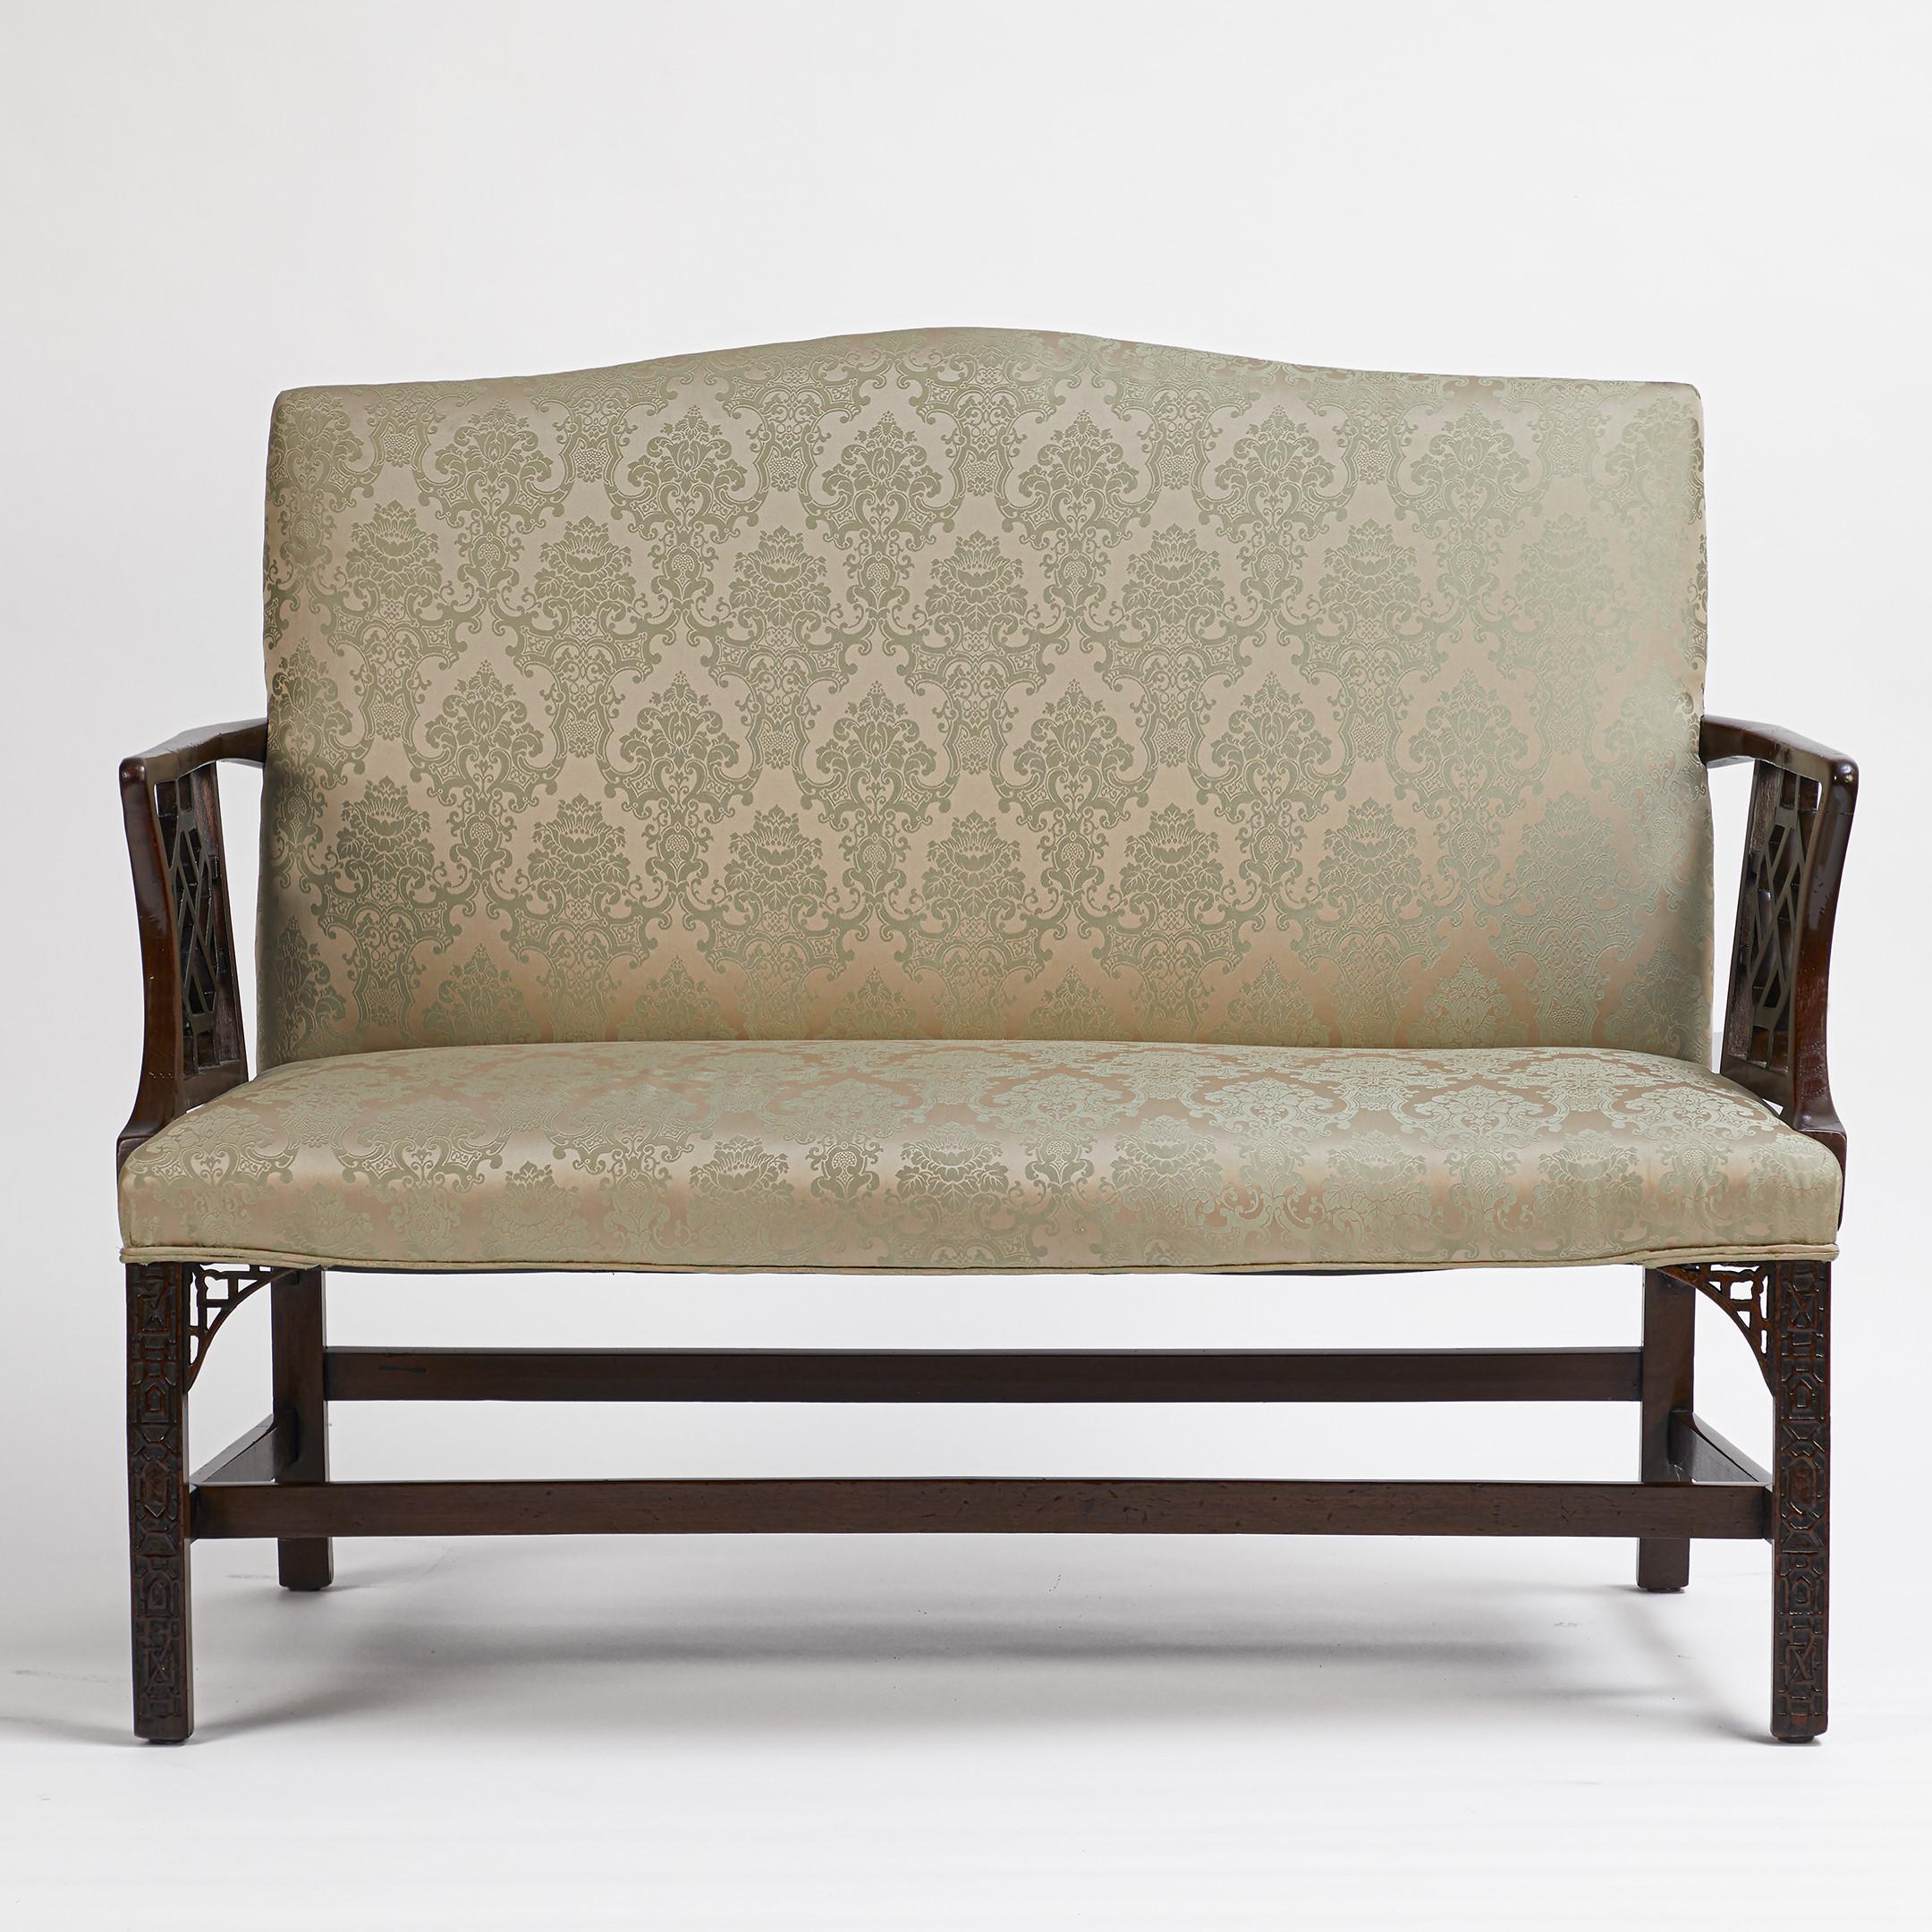 englisches Mahagoni-Chippendale-Sofa des 18. Jahrhunderts. 
Um 1780.